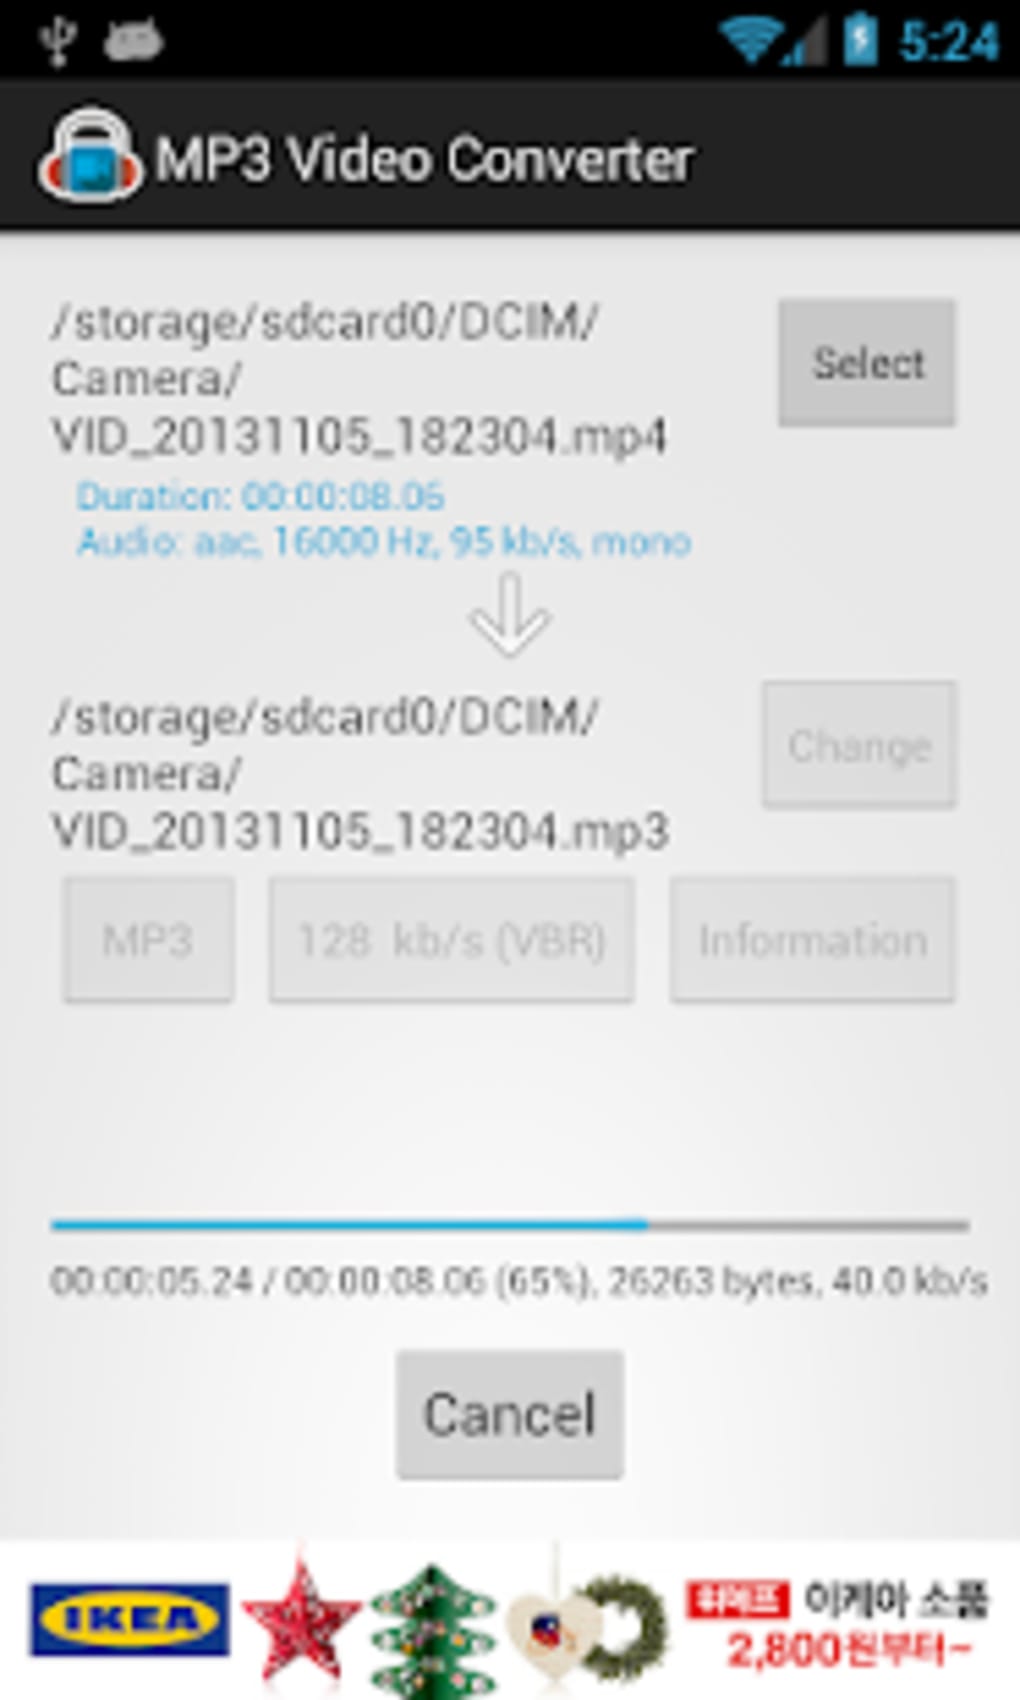 MP3 Converter - Video to Mp3 - Baixar APK para Android